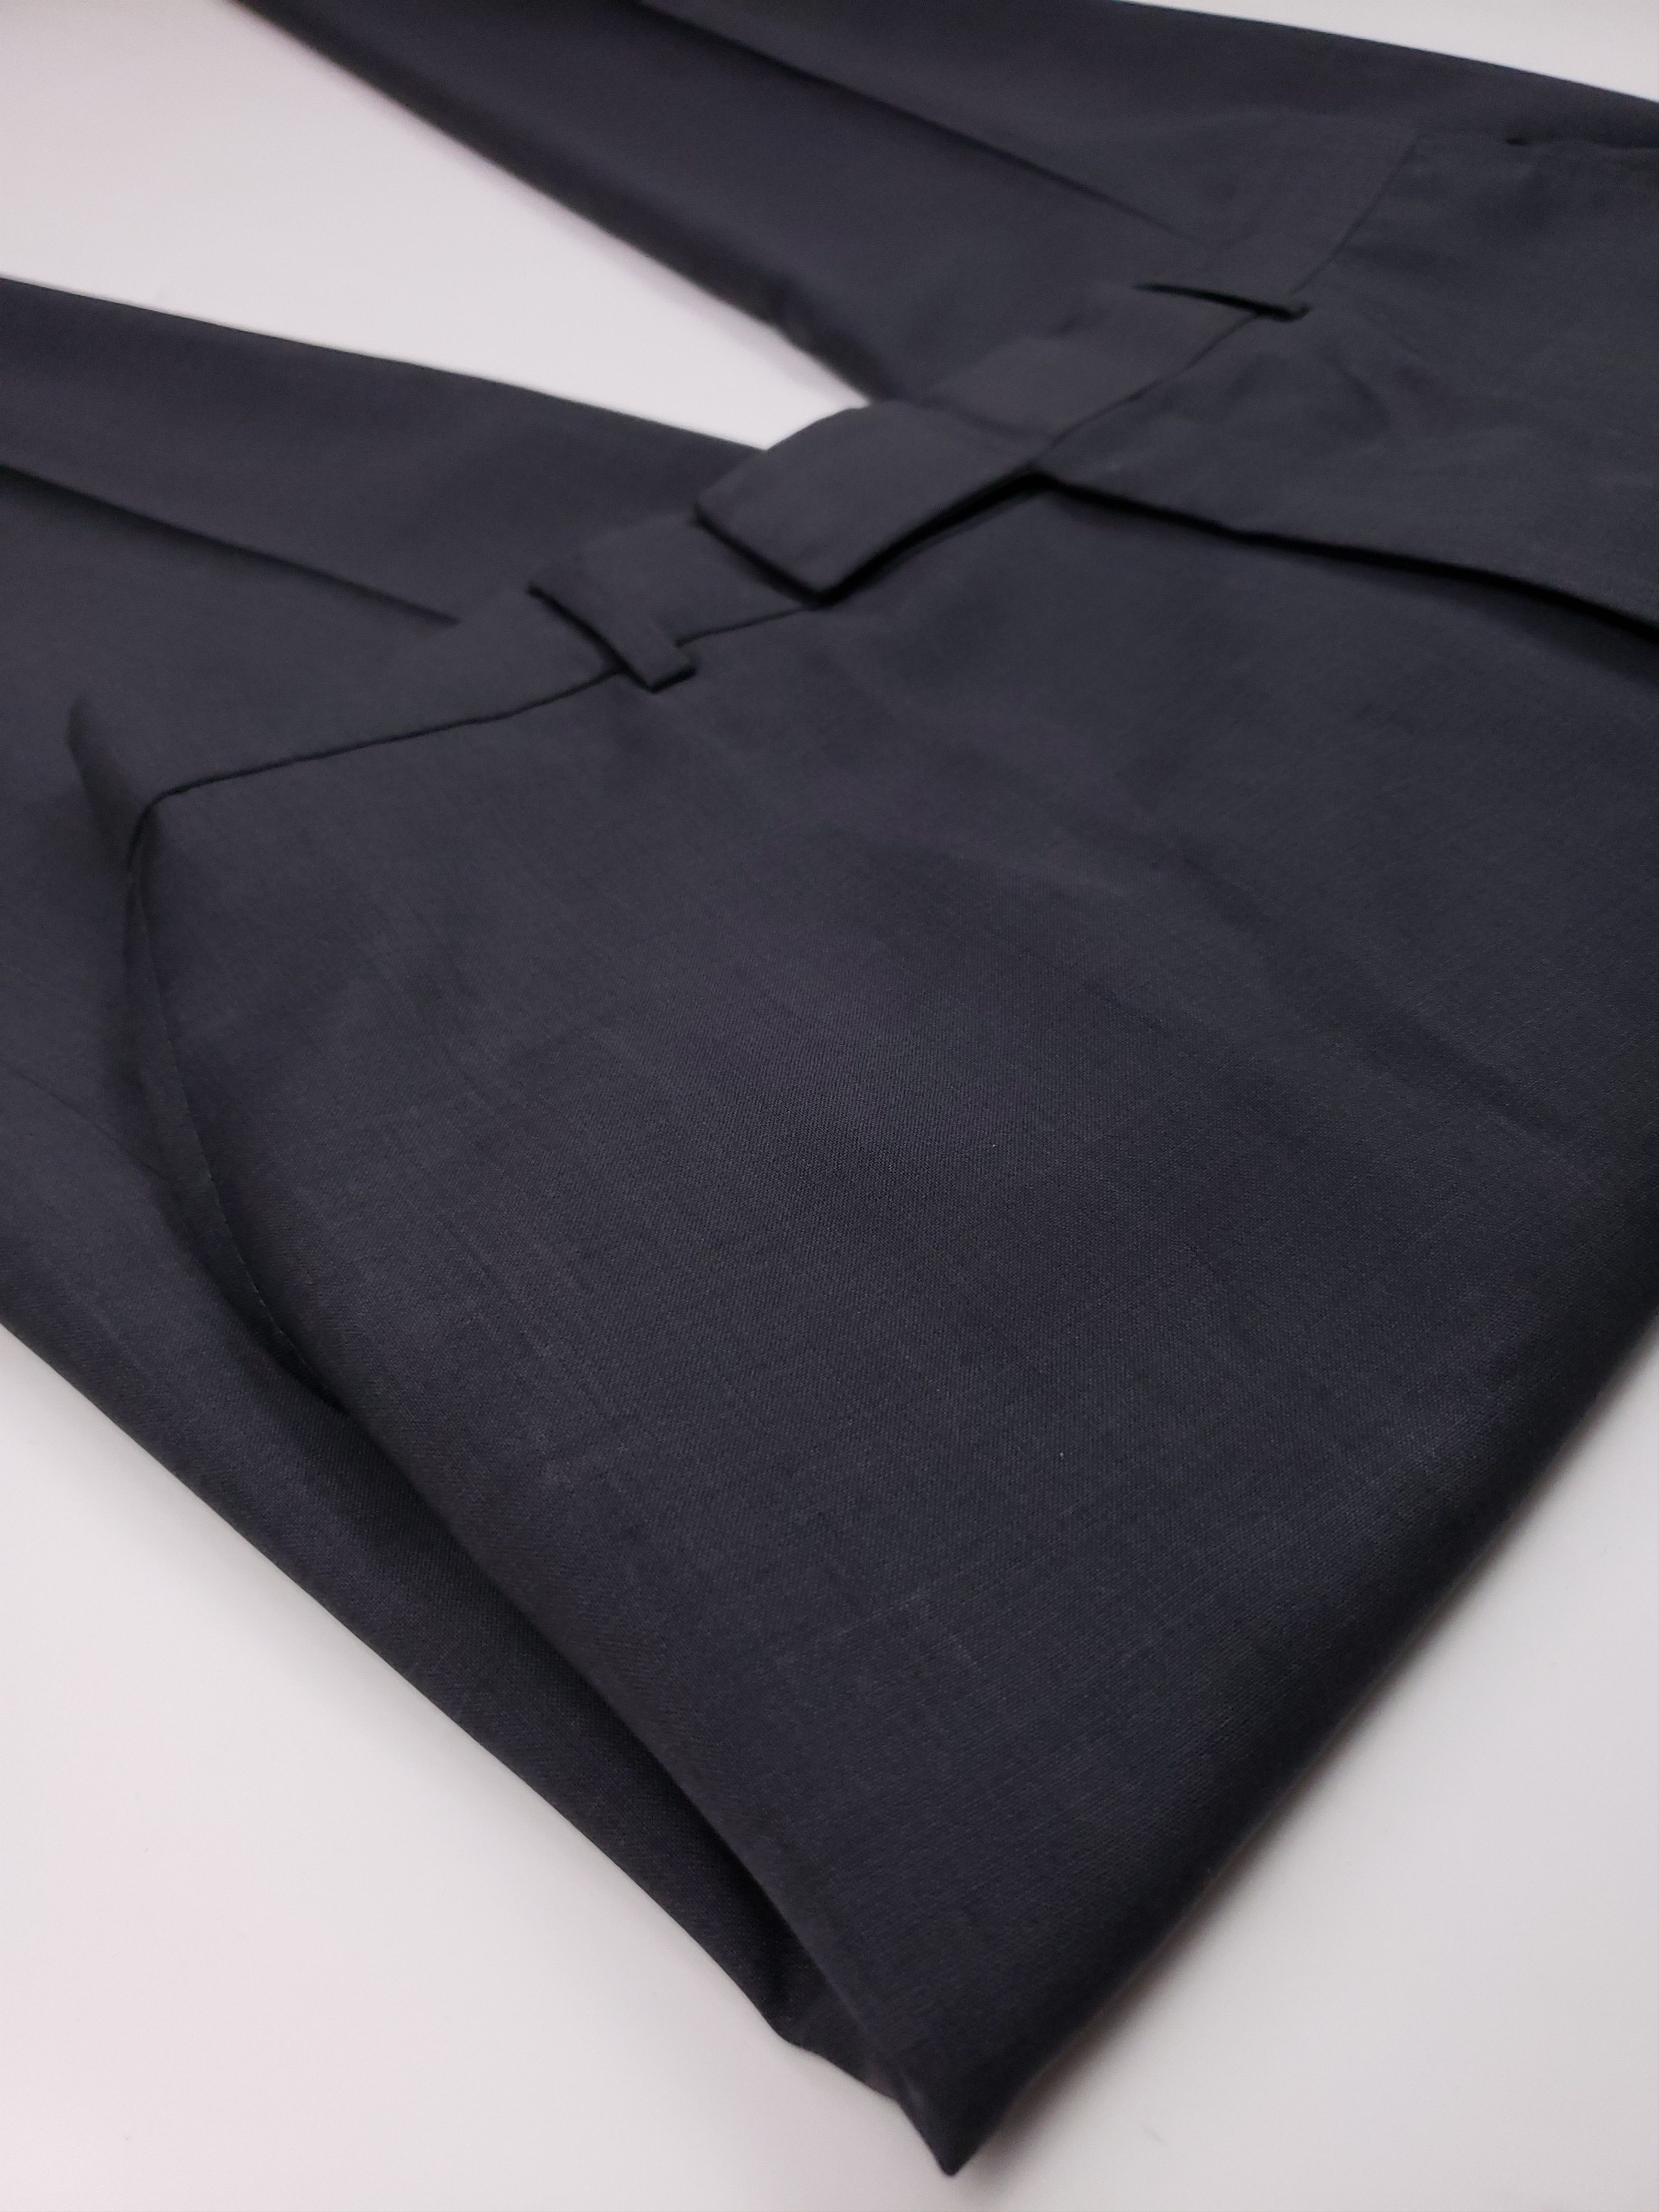 Hugo Boss Hugo Boss James Brown Pants 32x30 Gray Charcoal Wool Cashme Size US 32 / EU 48 - 8 Thumbnail